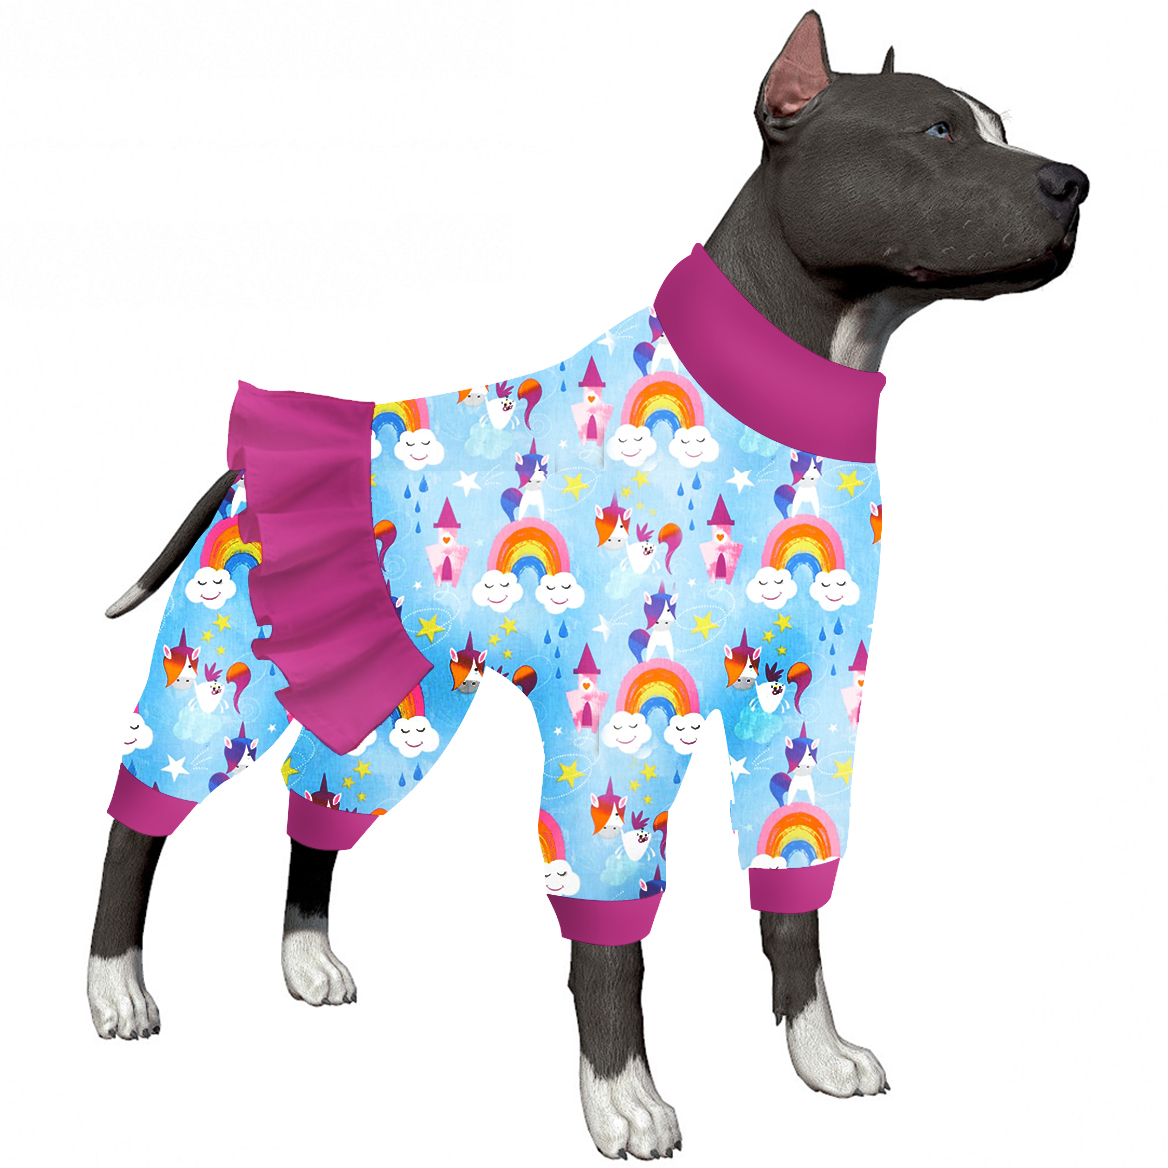 Lovinpet Pitbull Dog Pajamas, Large Dog Onesies for Surgery/Wound Care –  KOL PET